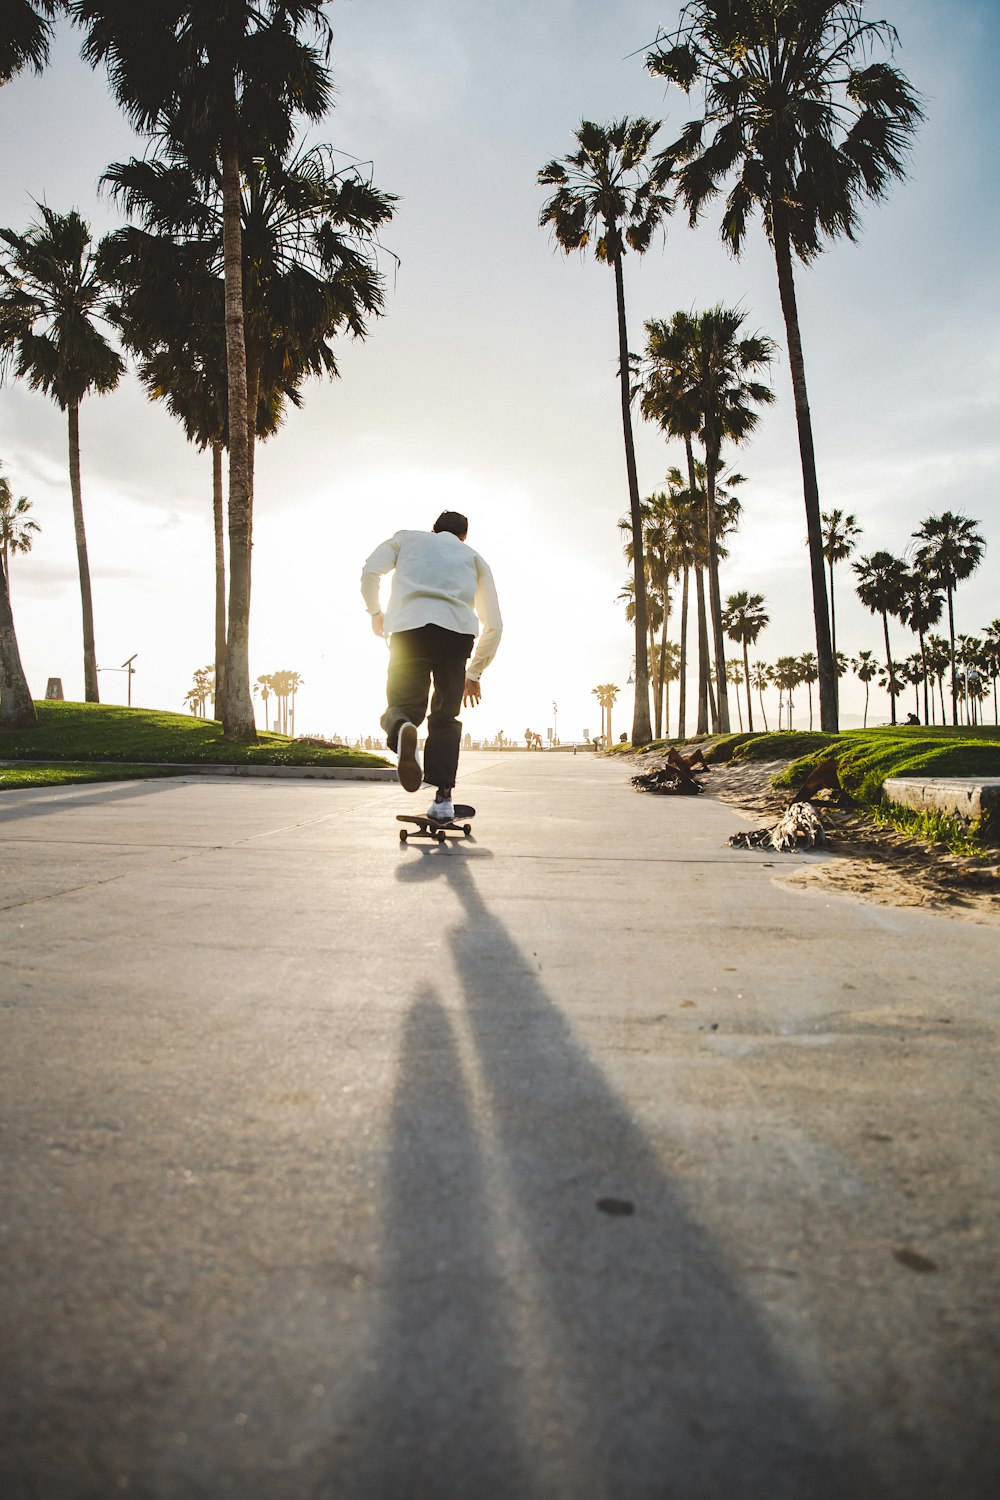 man riding on skateboard on road